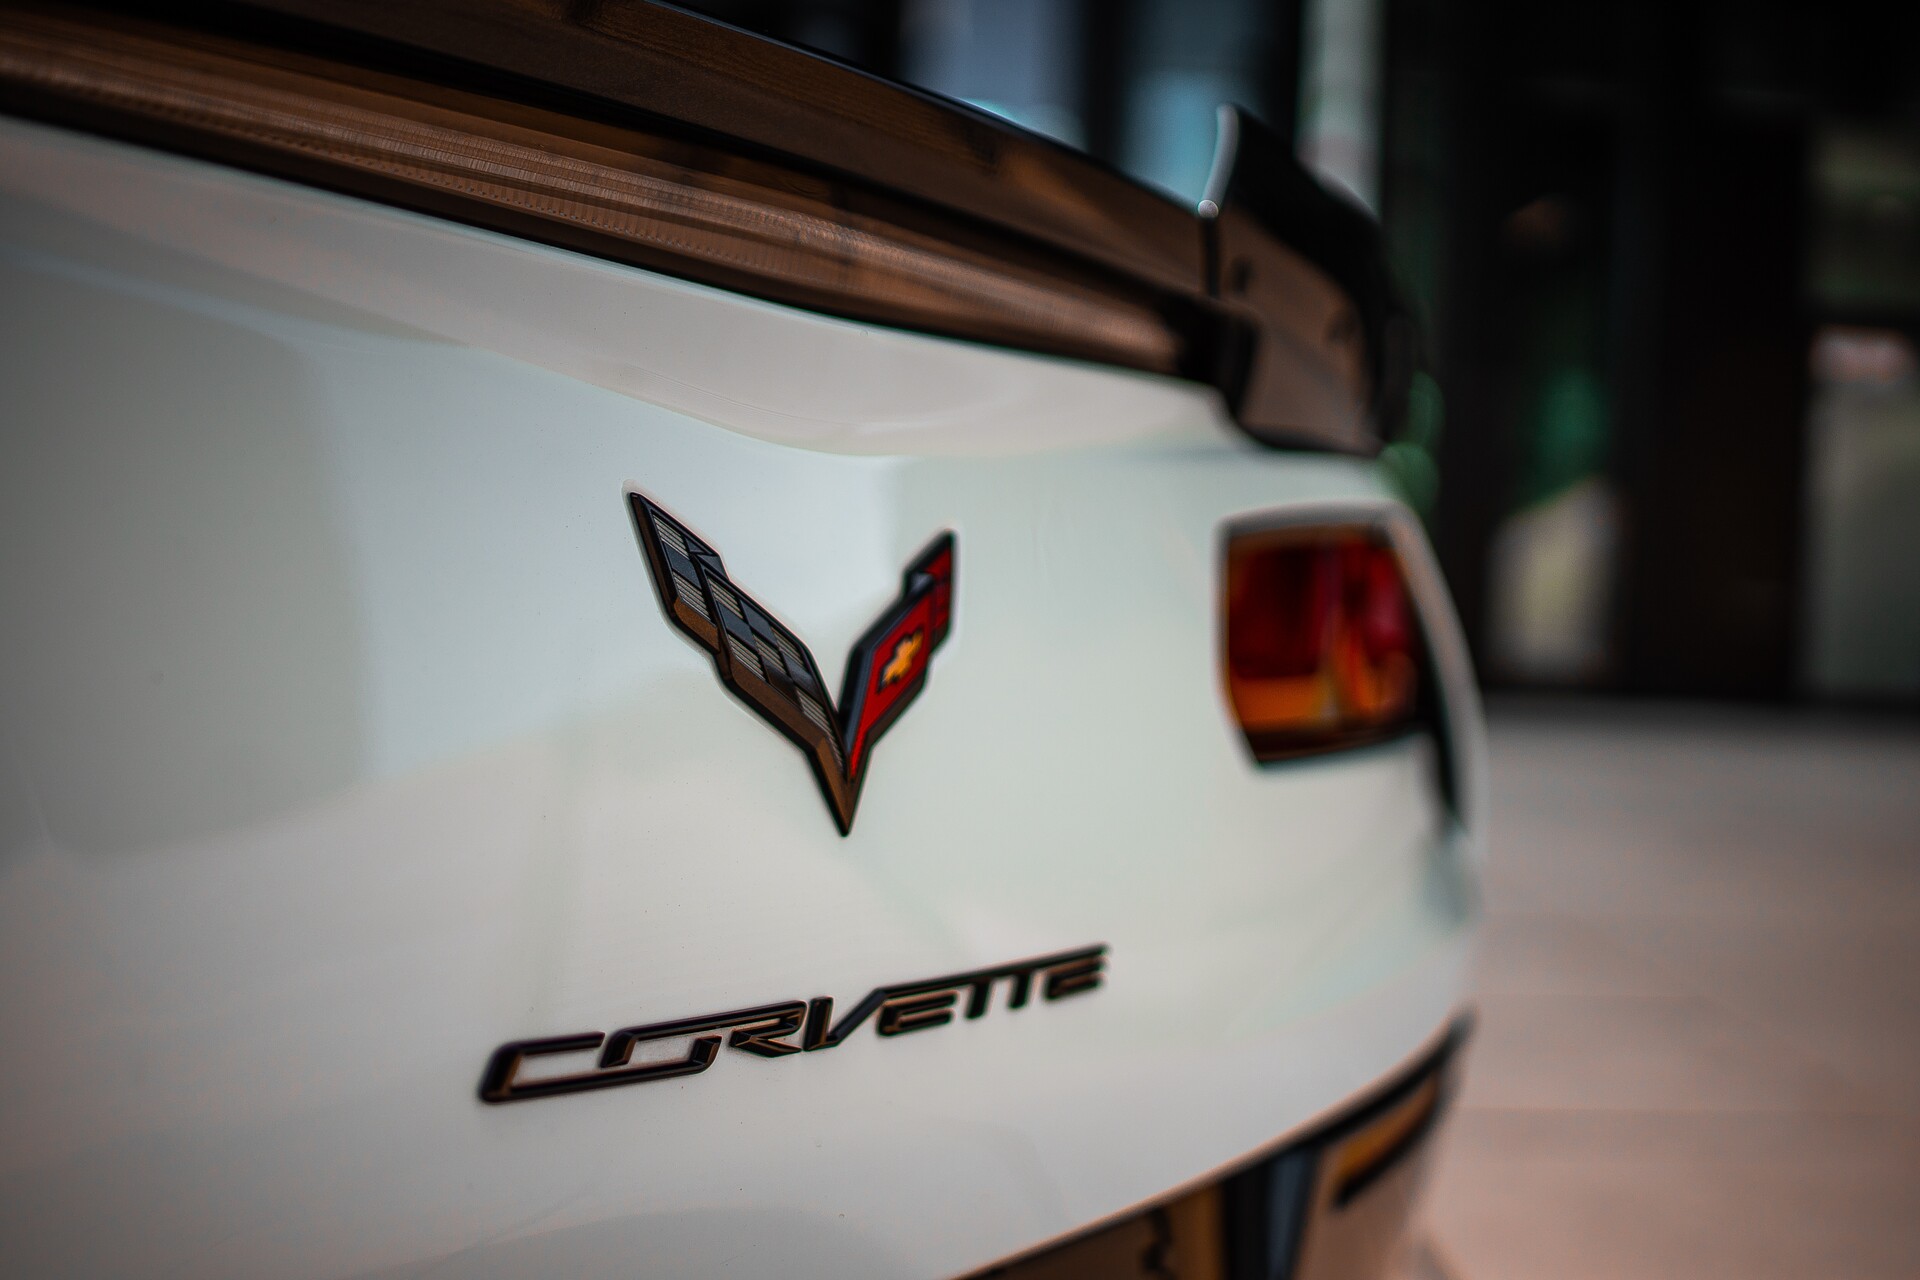 Corvette C7 Z51